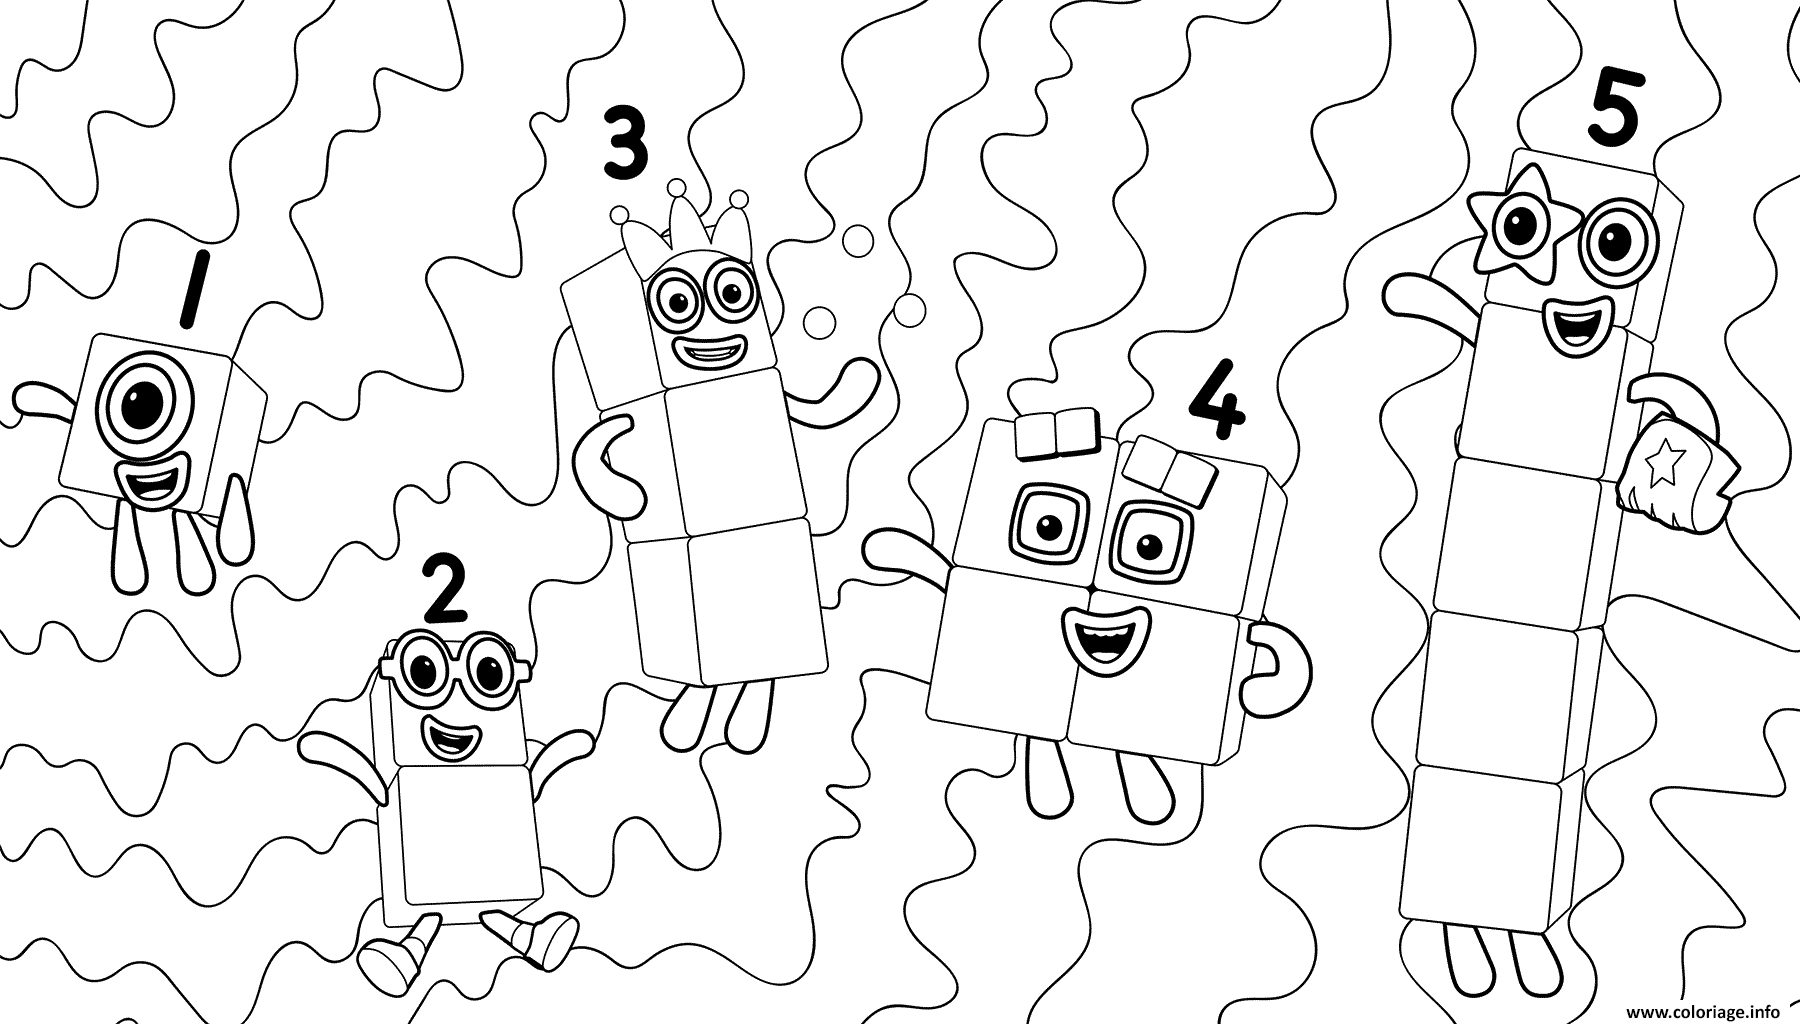 Dessin Numberblocks Numbers 1 to 5 fun Coloriage Gratuit à Imprimer